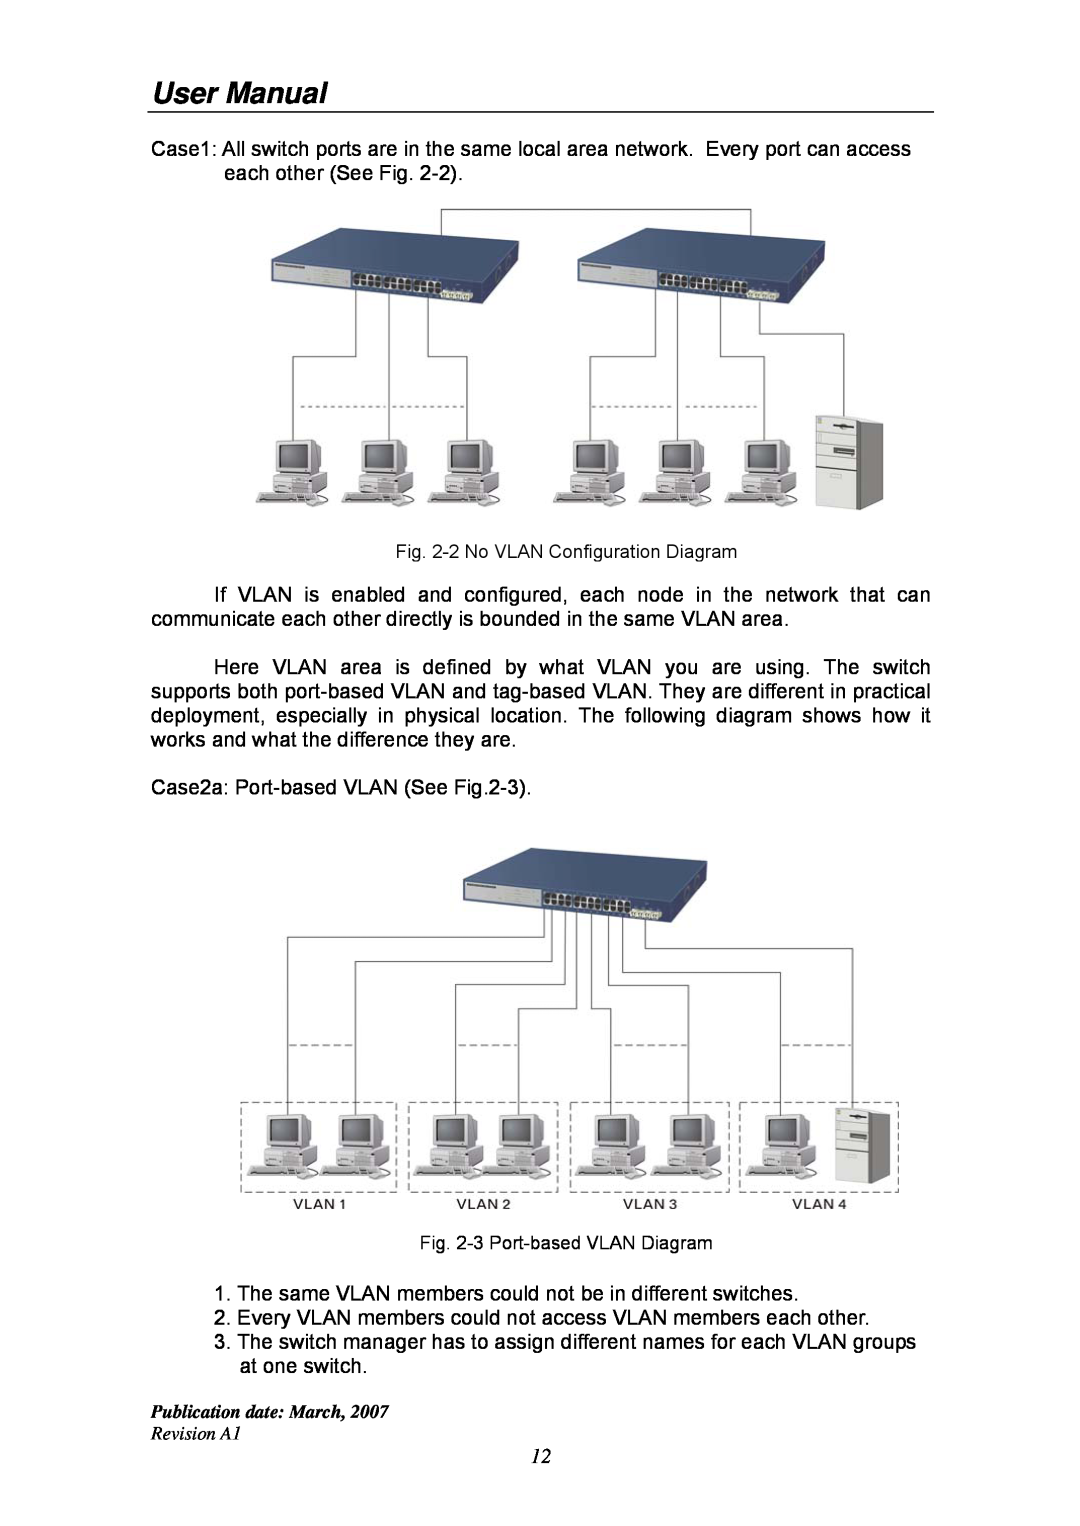 Ruby Tech GS-1224L manual User Manual, Case2a Port-based VLAN See -3 